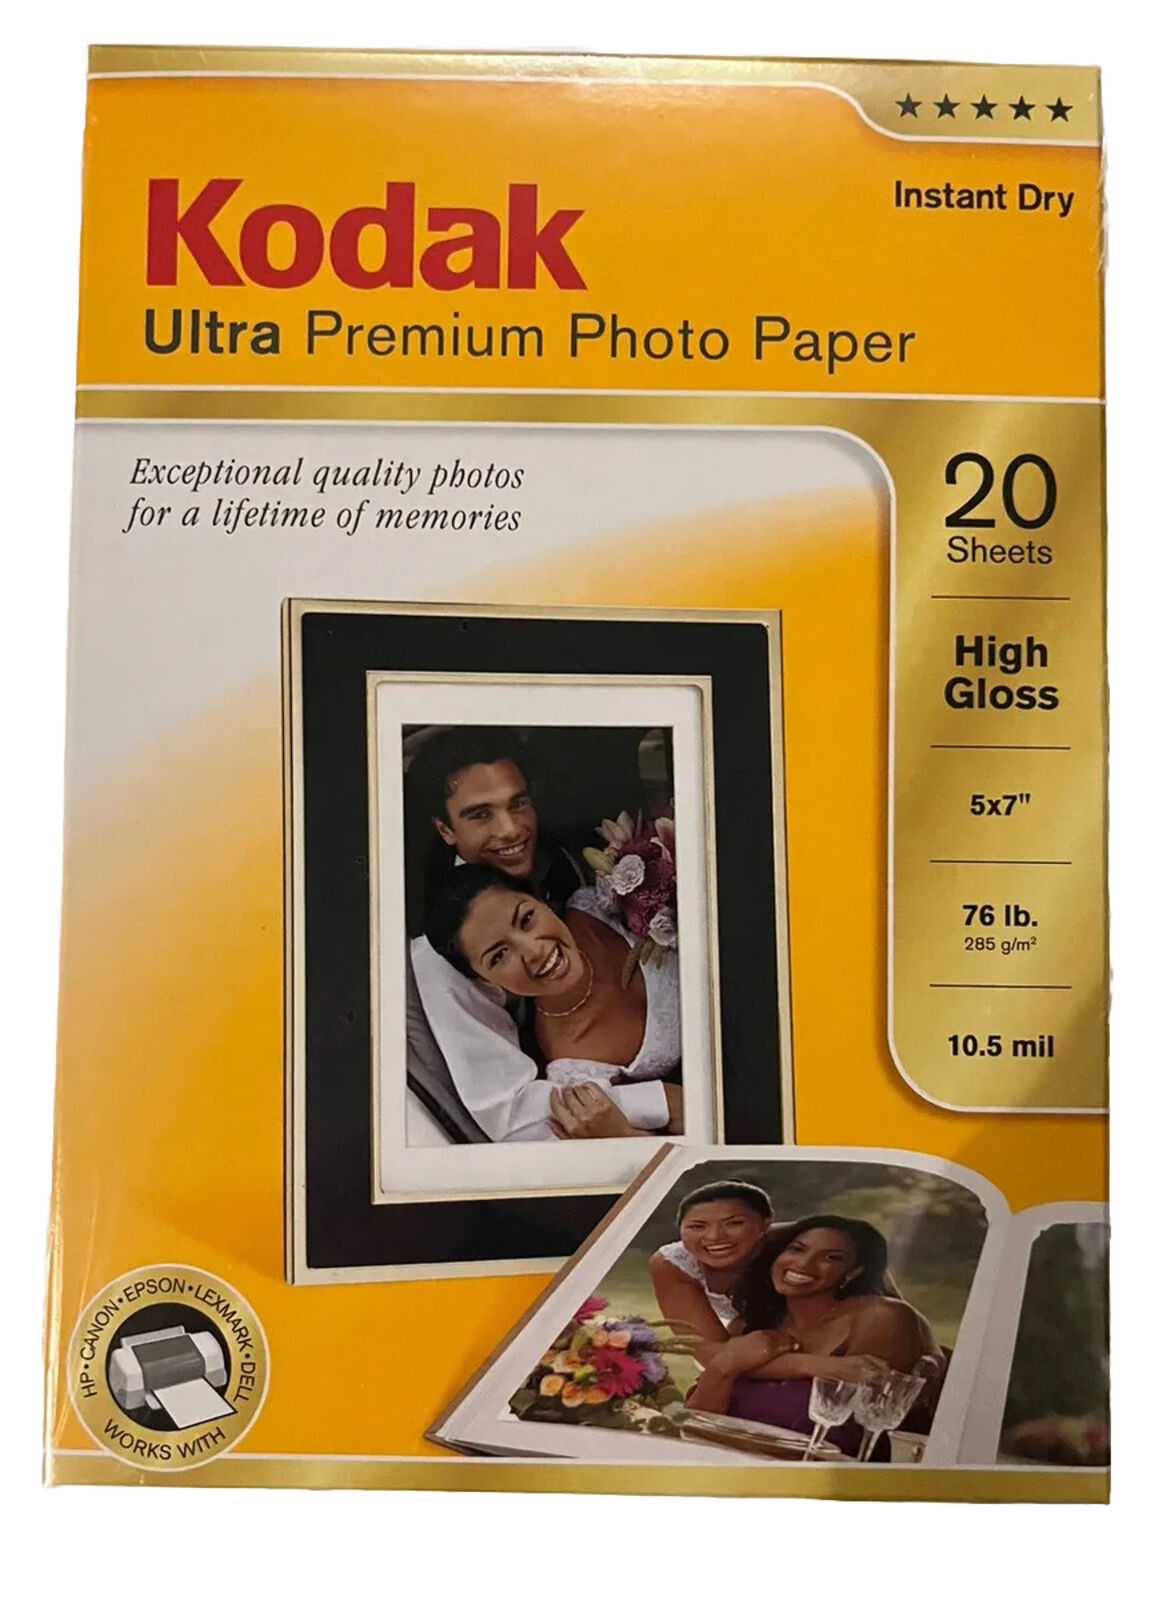 NEW Kodak Ultra Premium Photo Paper 5x7 High Gloss 20 Sheets SEALED